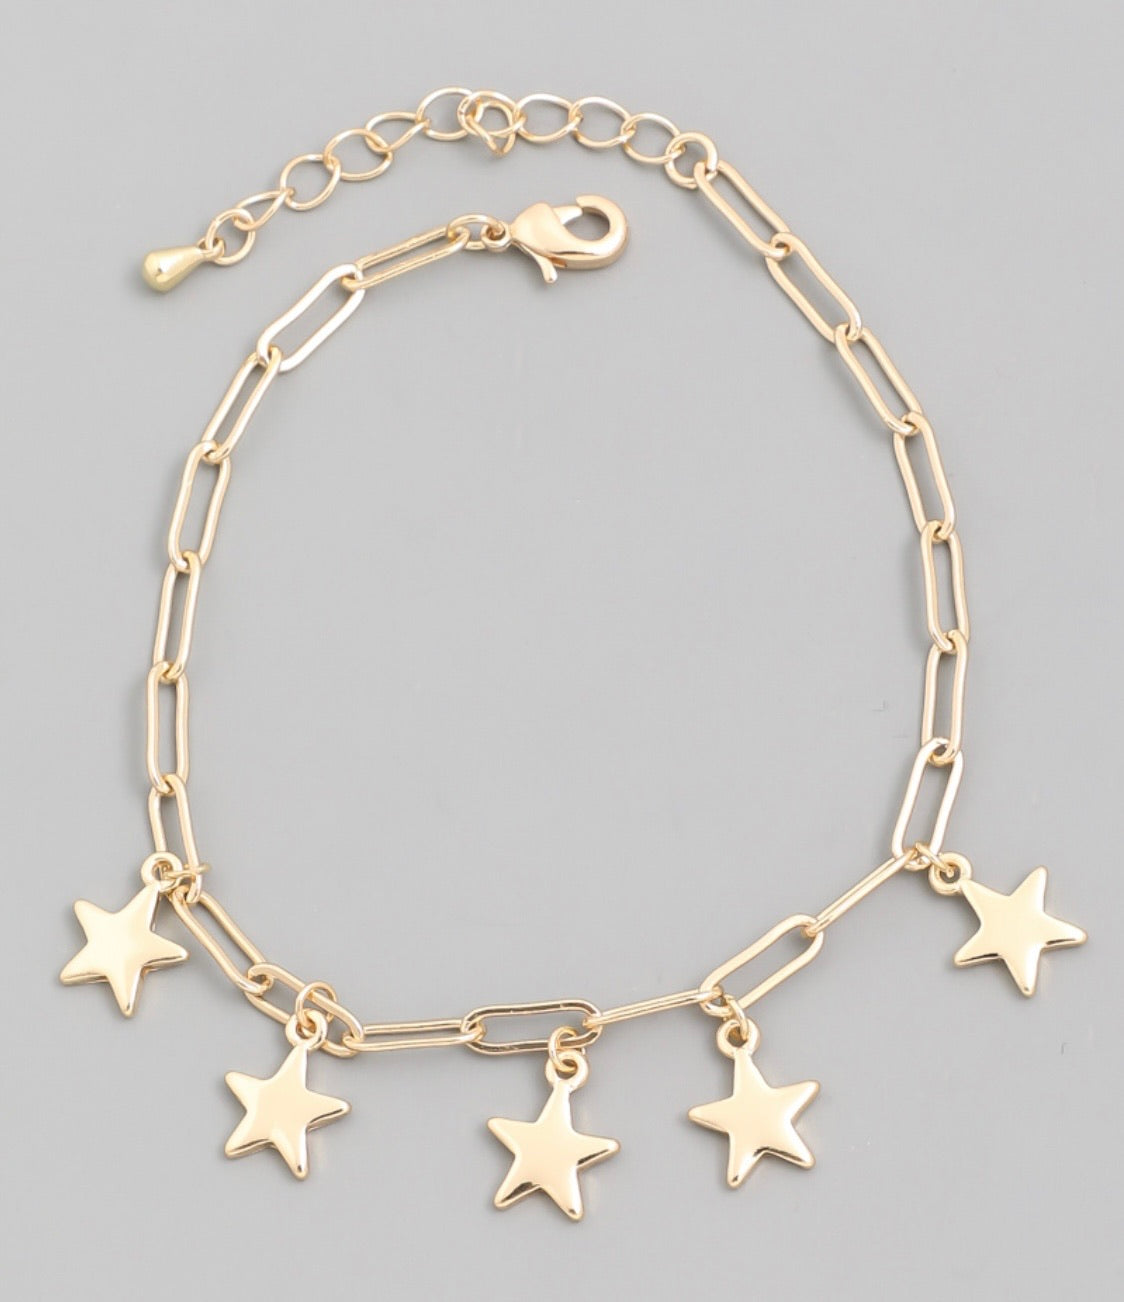 Chain Link Star Bracelet